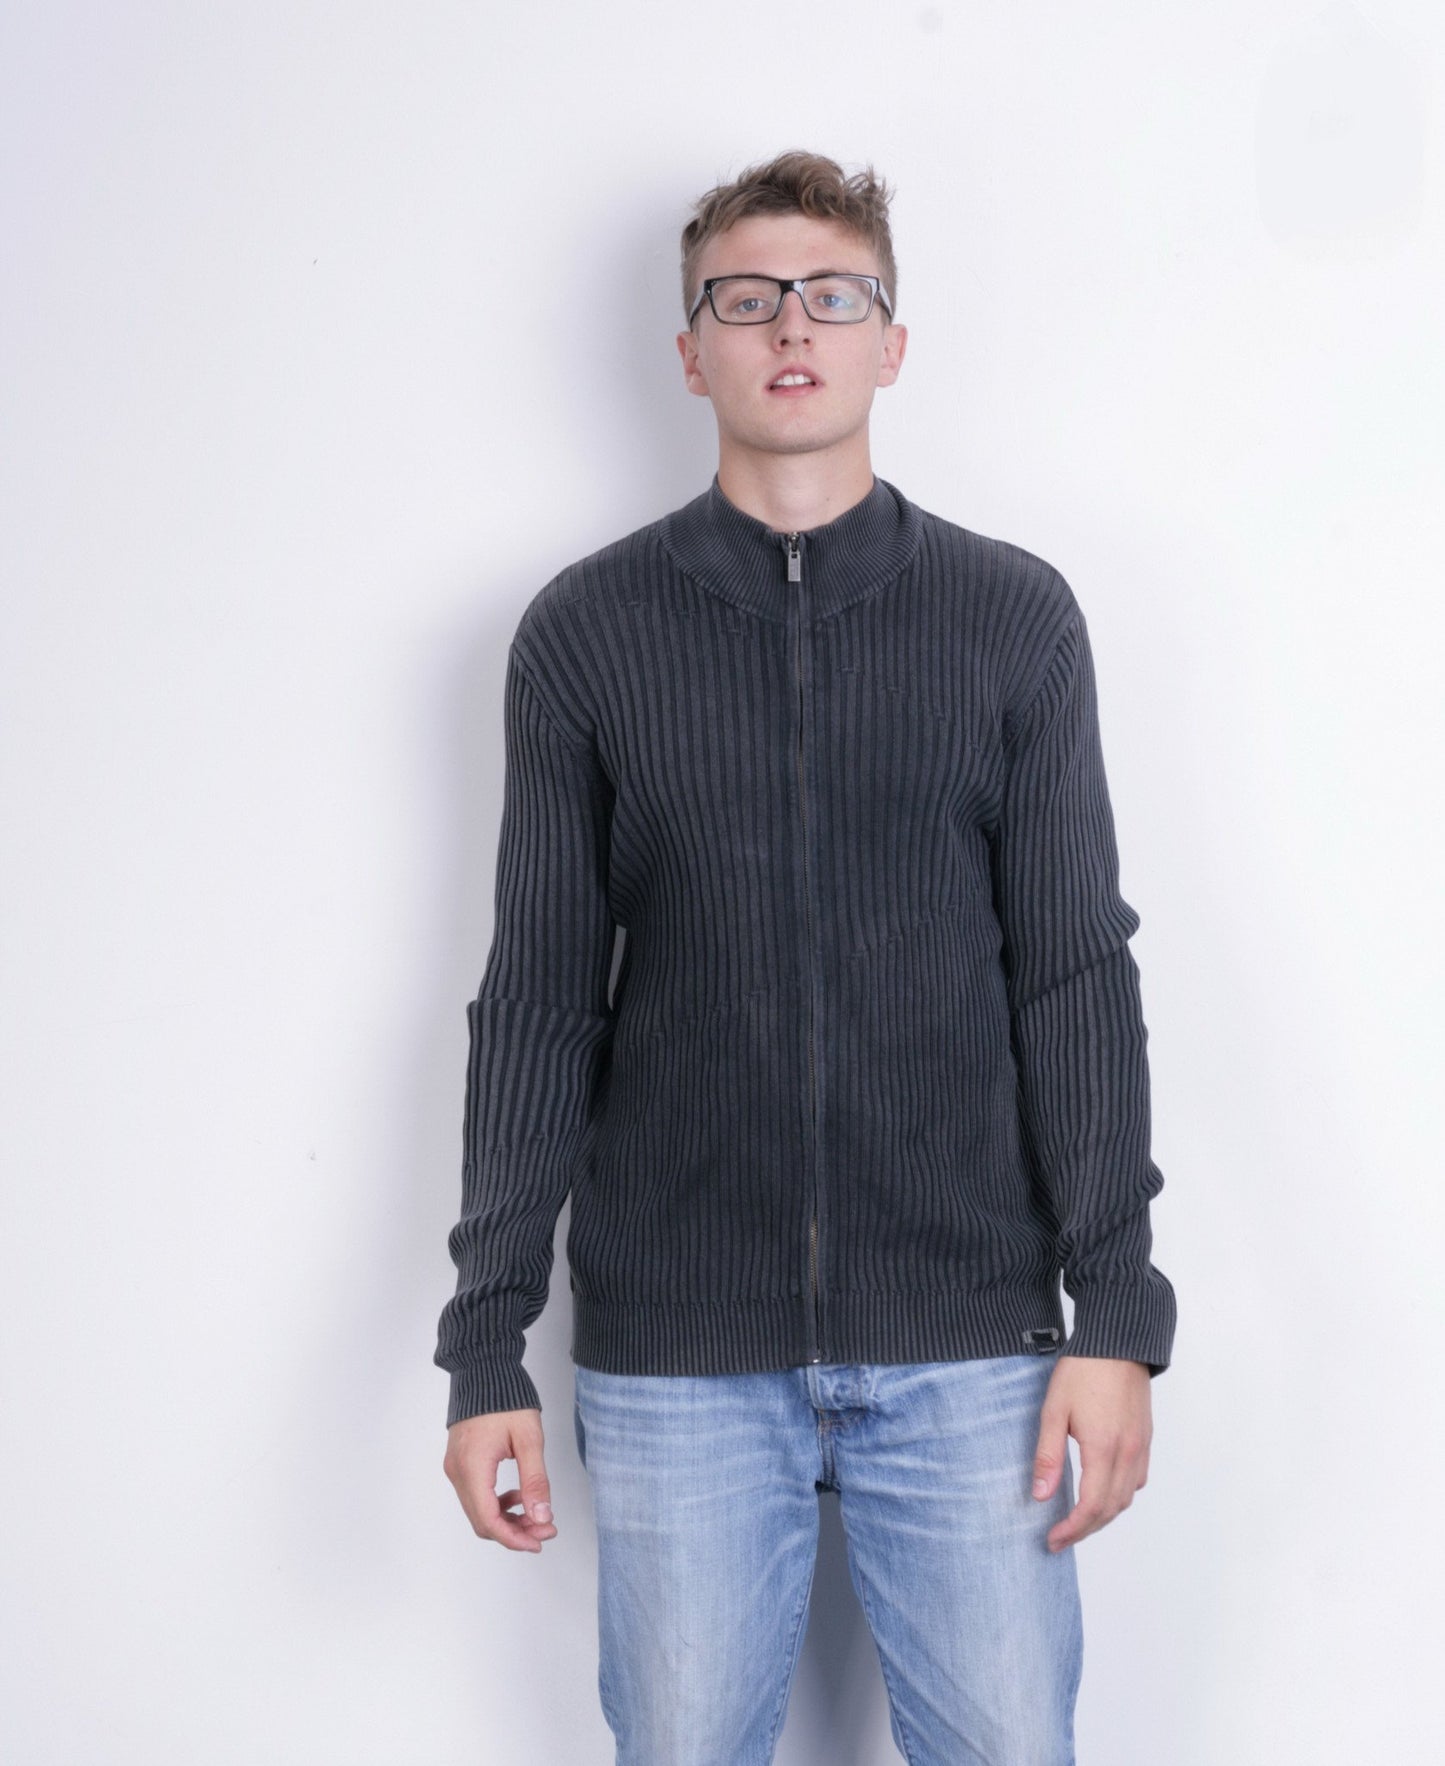 Calvin Klein Jeans Men XXL (XL) Cardigan Gray Faded Vintage Cotton Zip Up Stretch Sweater